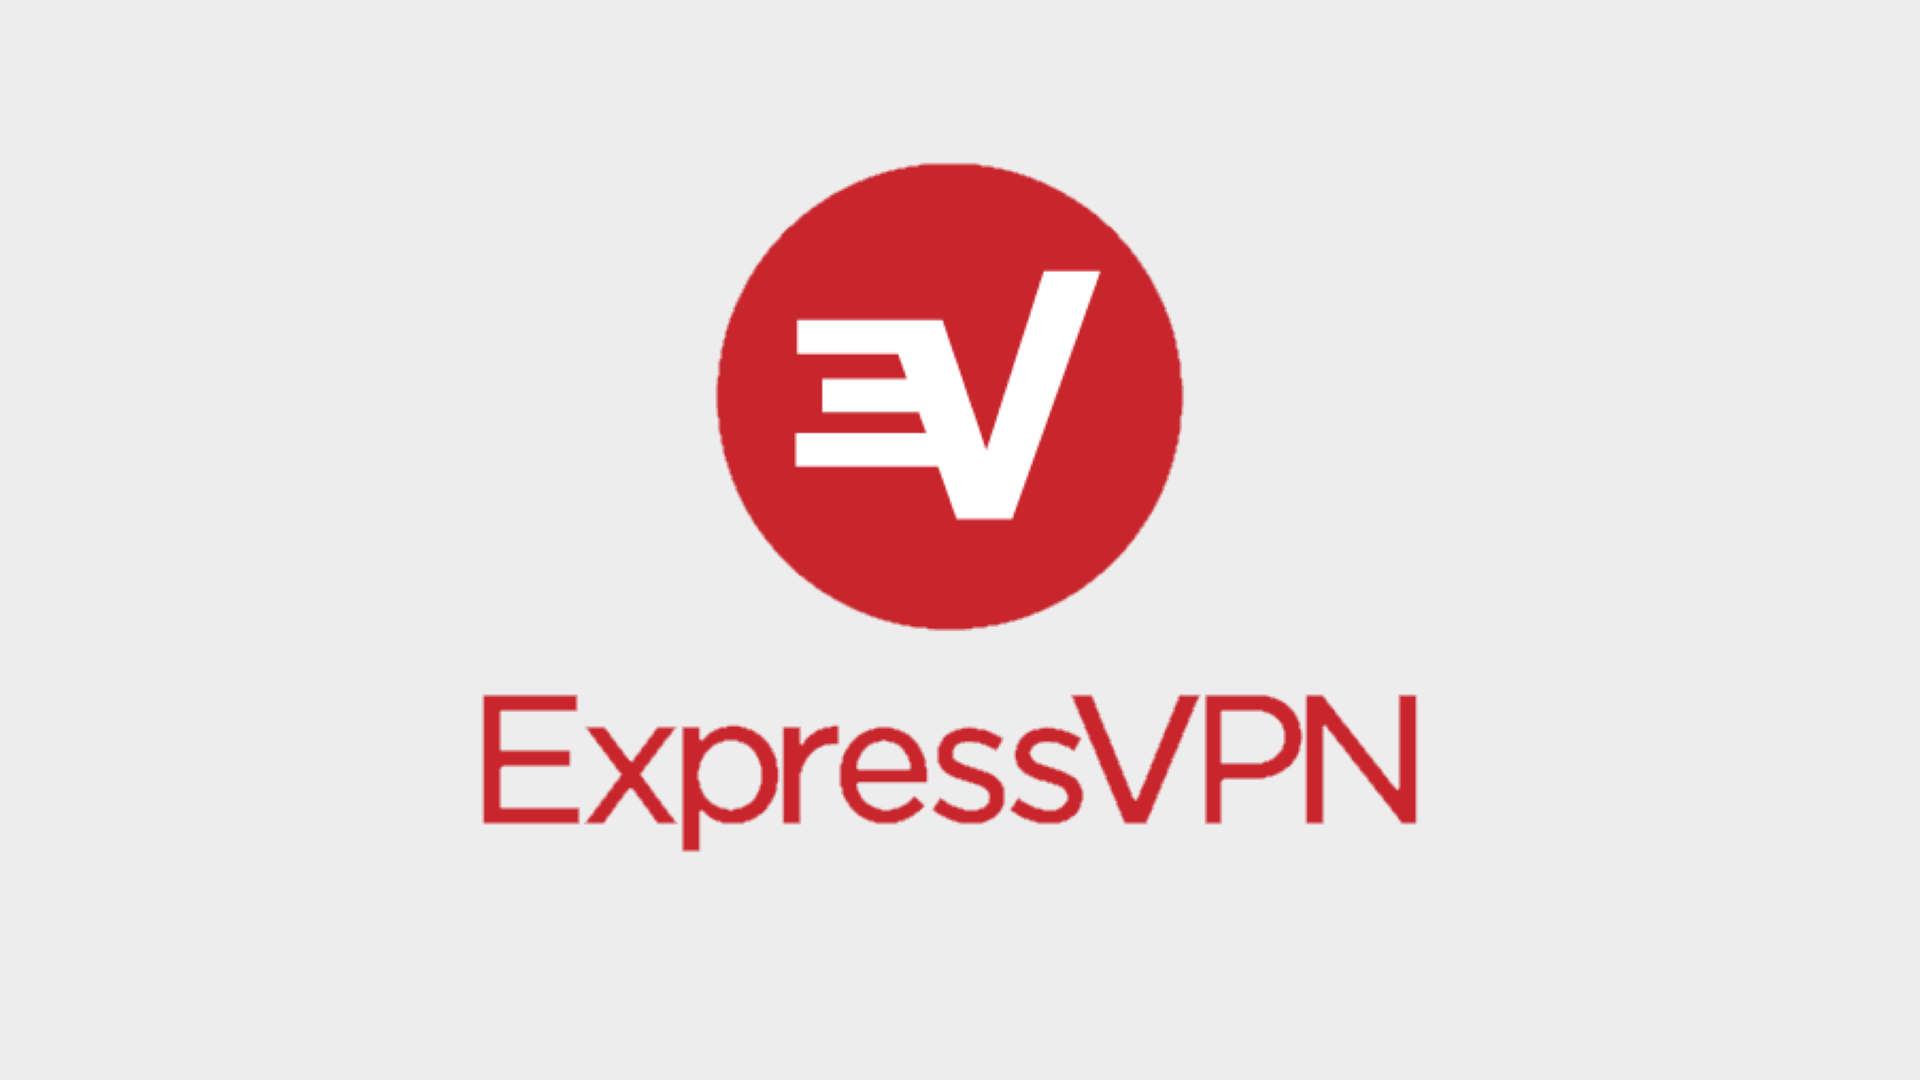 Image of the ExpressVPN logo on a grey background